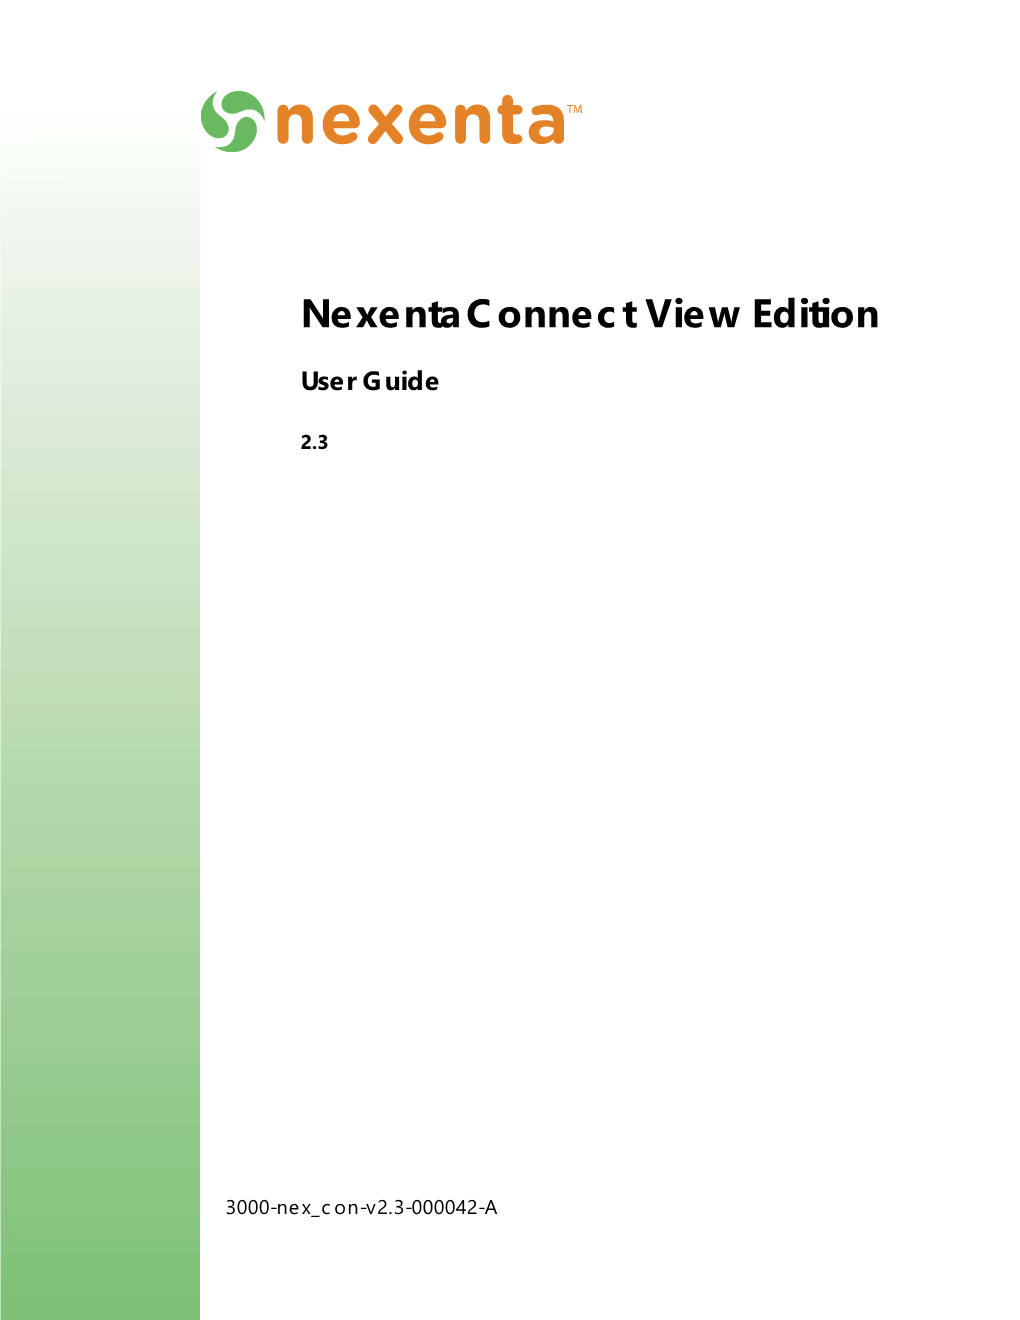 Nexentaconnect User Guide V2.3